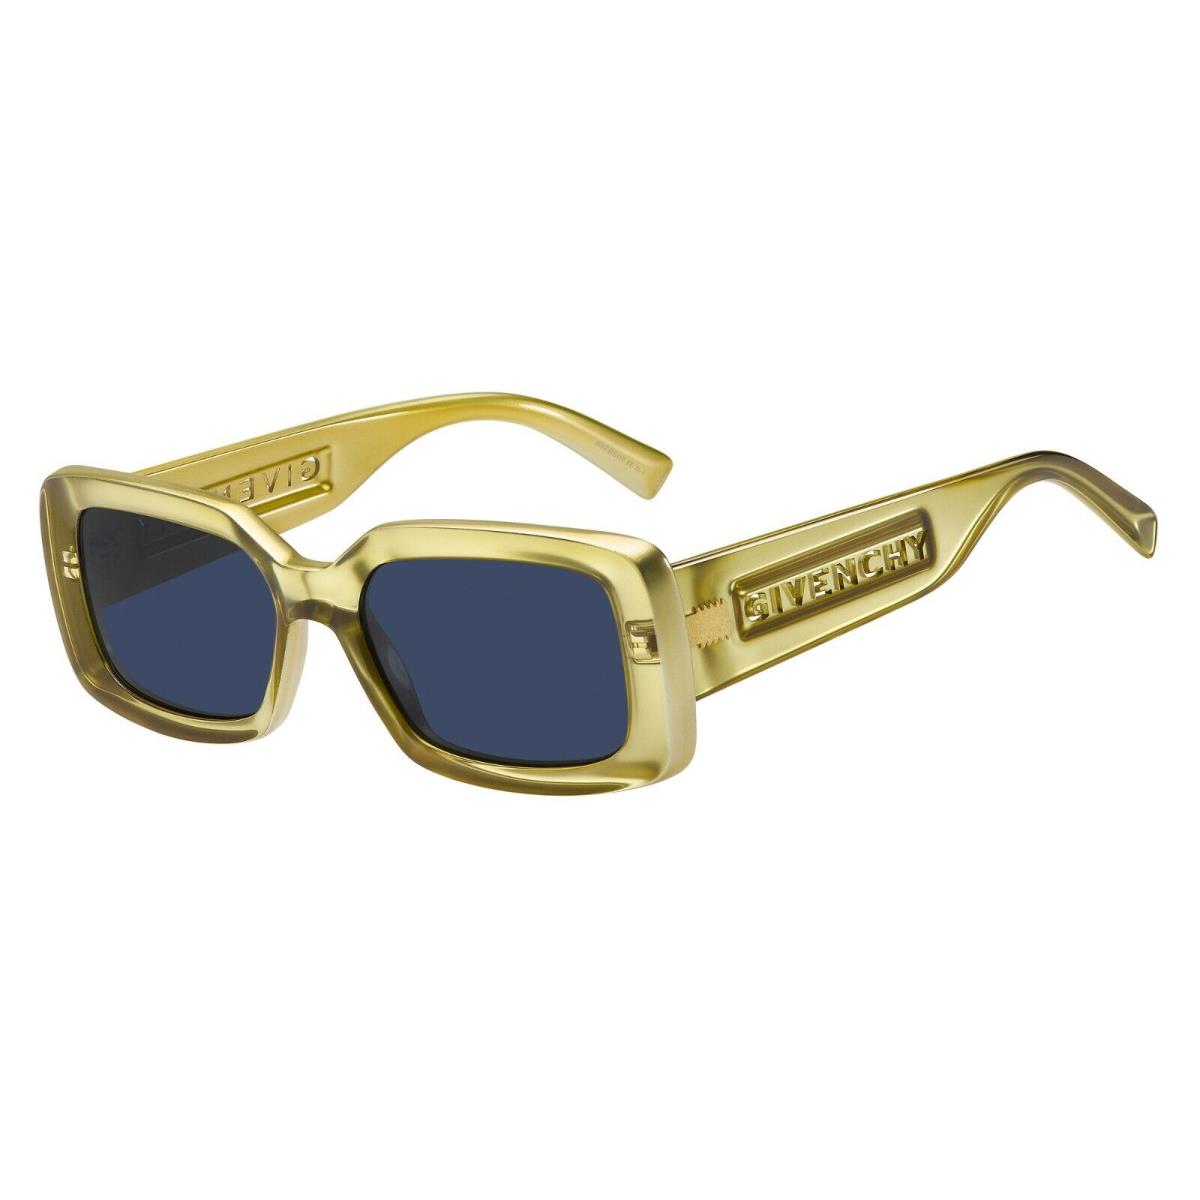 Givenchy GV 7201/S Yellow/blue J5G/KU Sunglasses